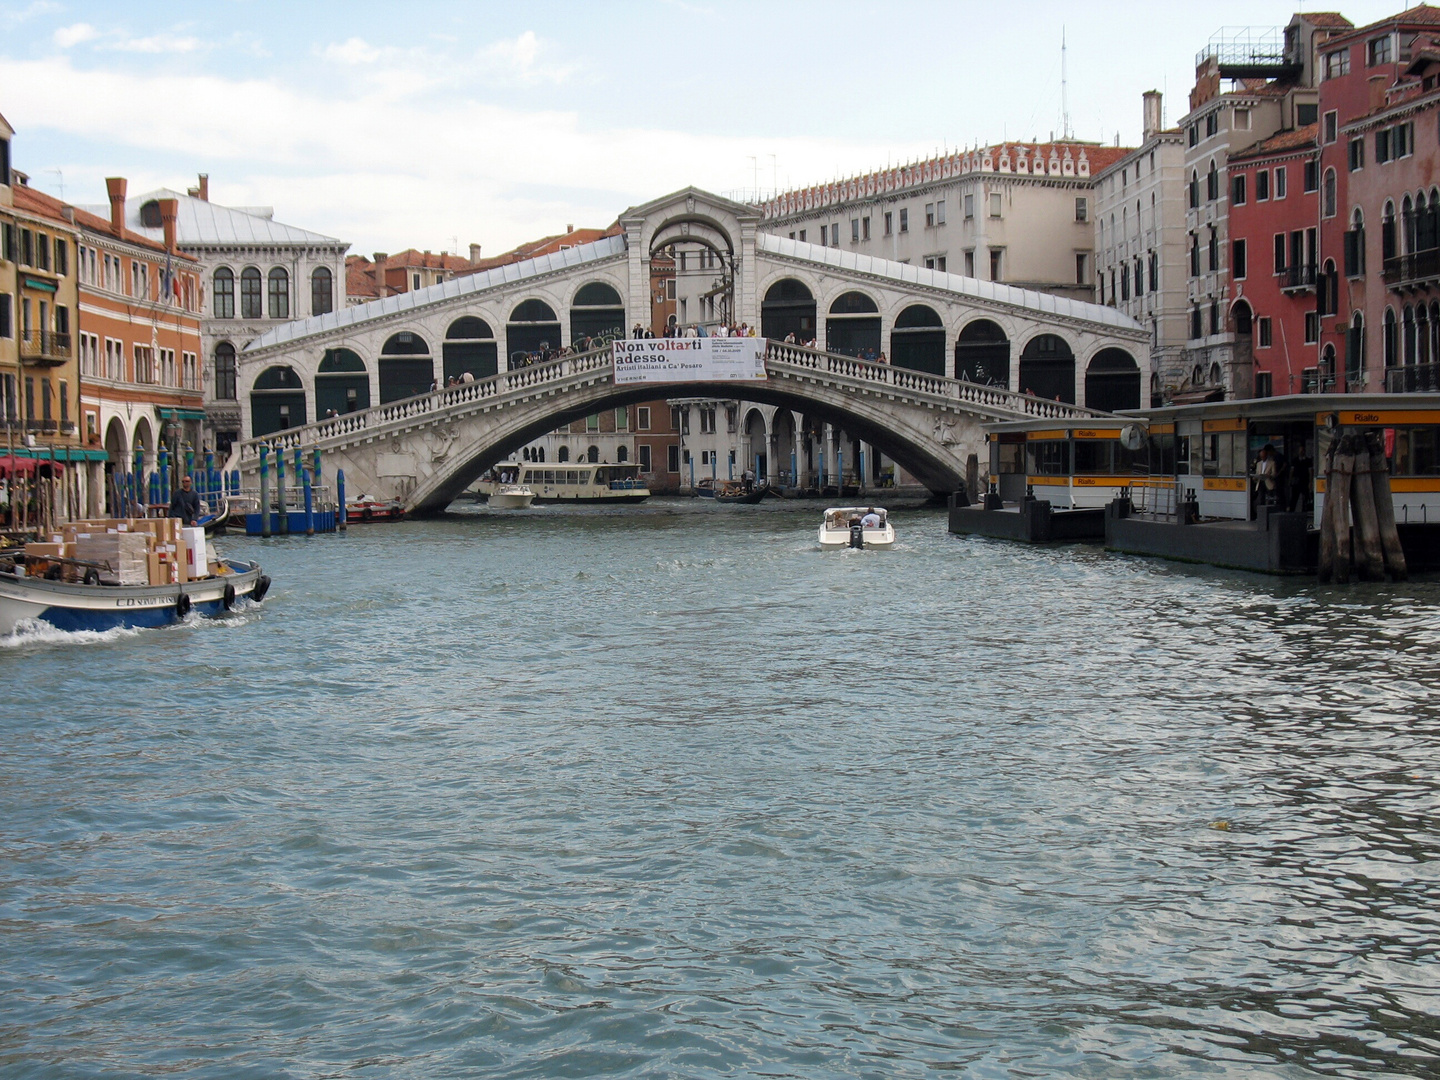 Venedig auf dem Canal Grande mit Rialtobrücke